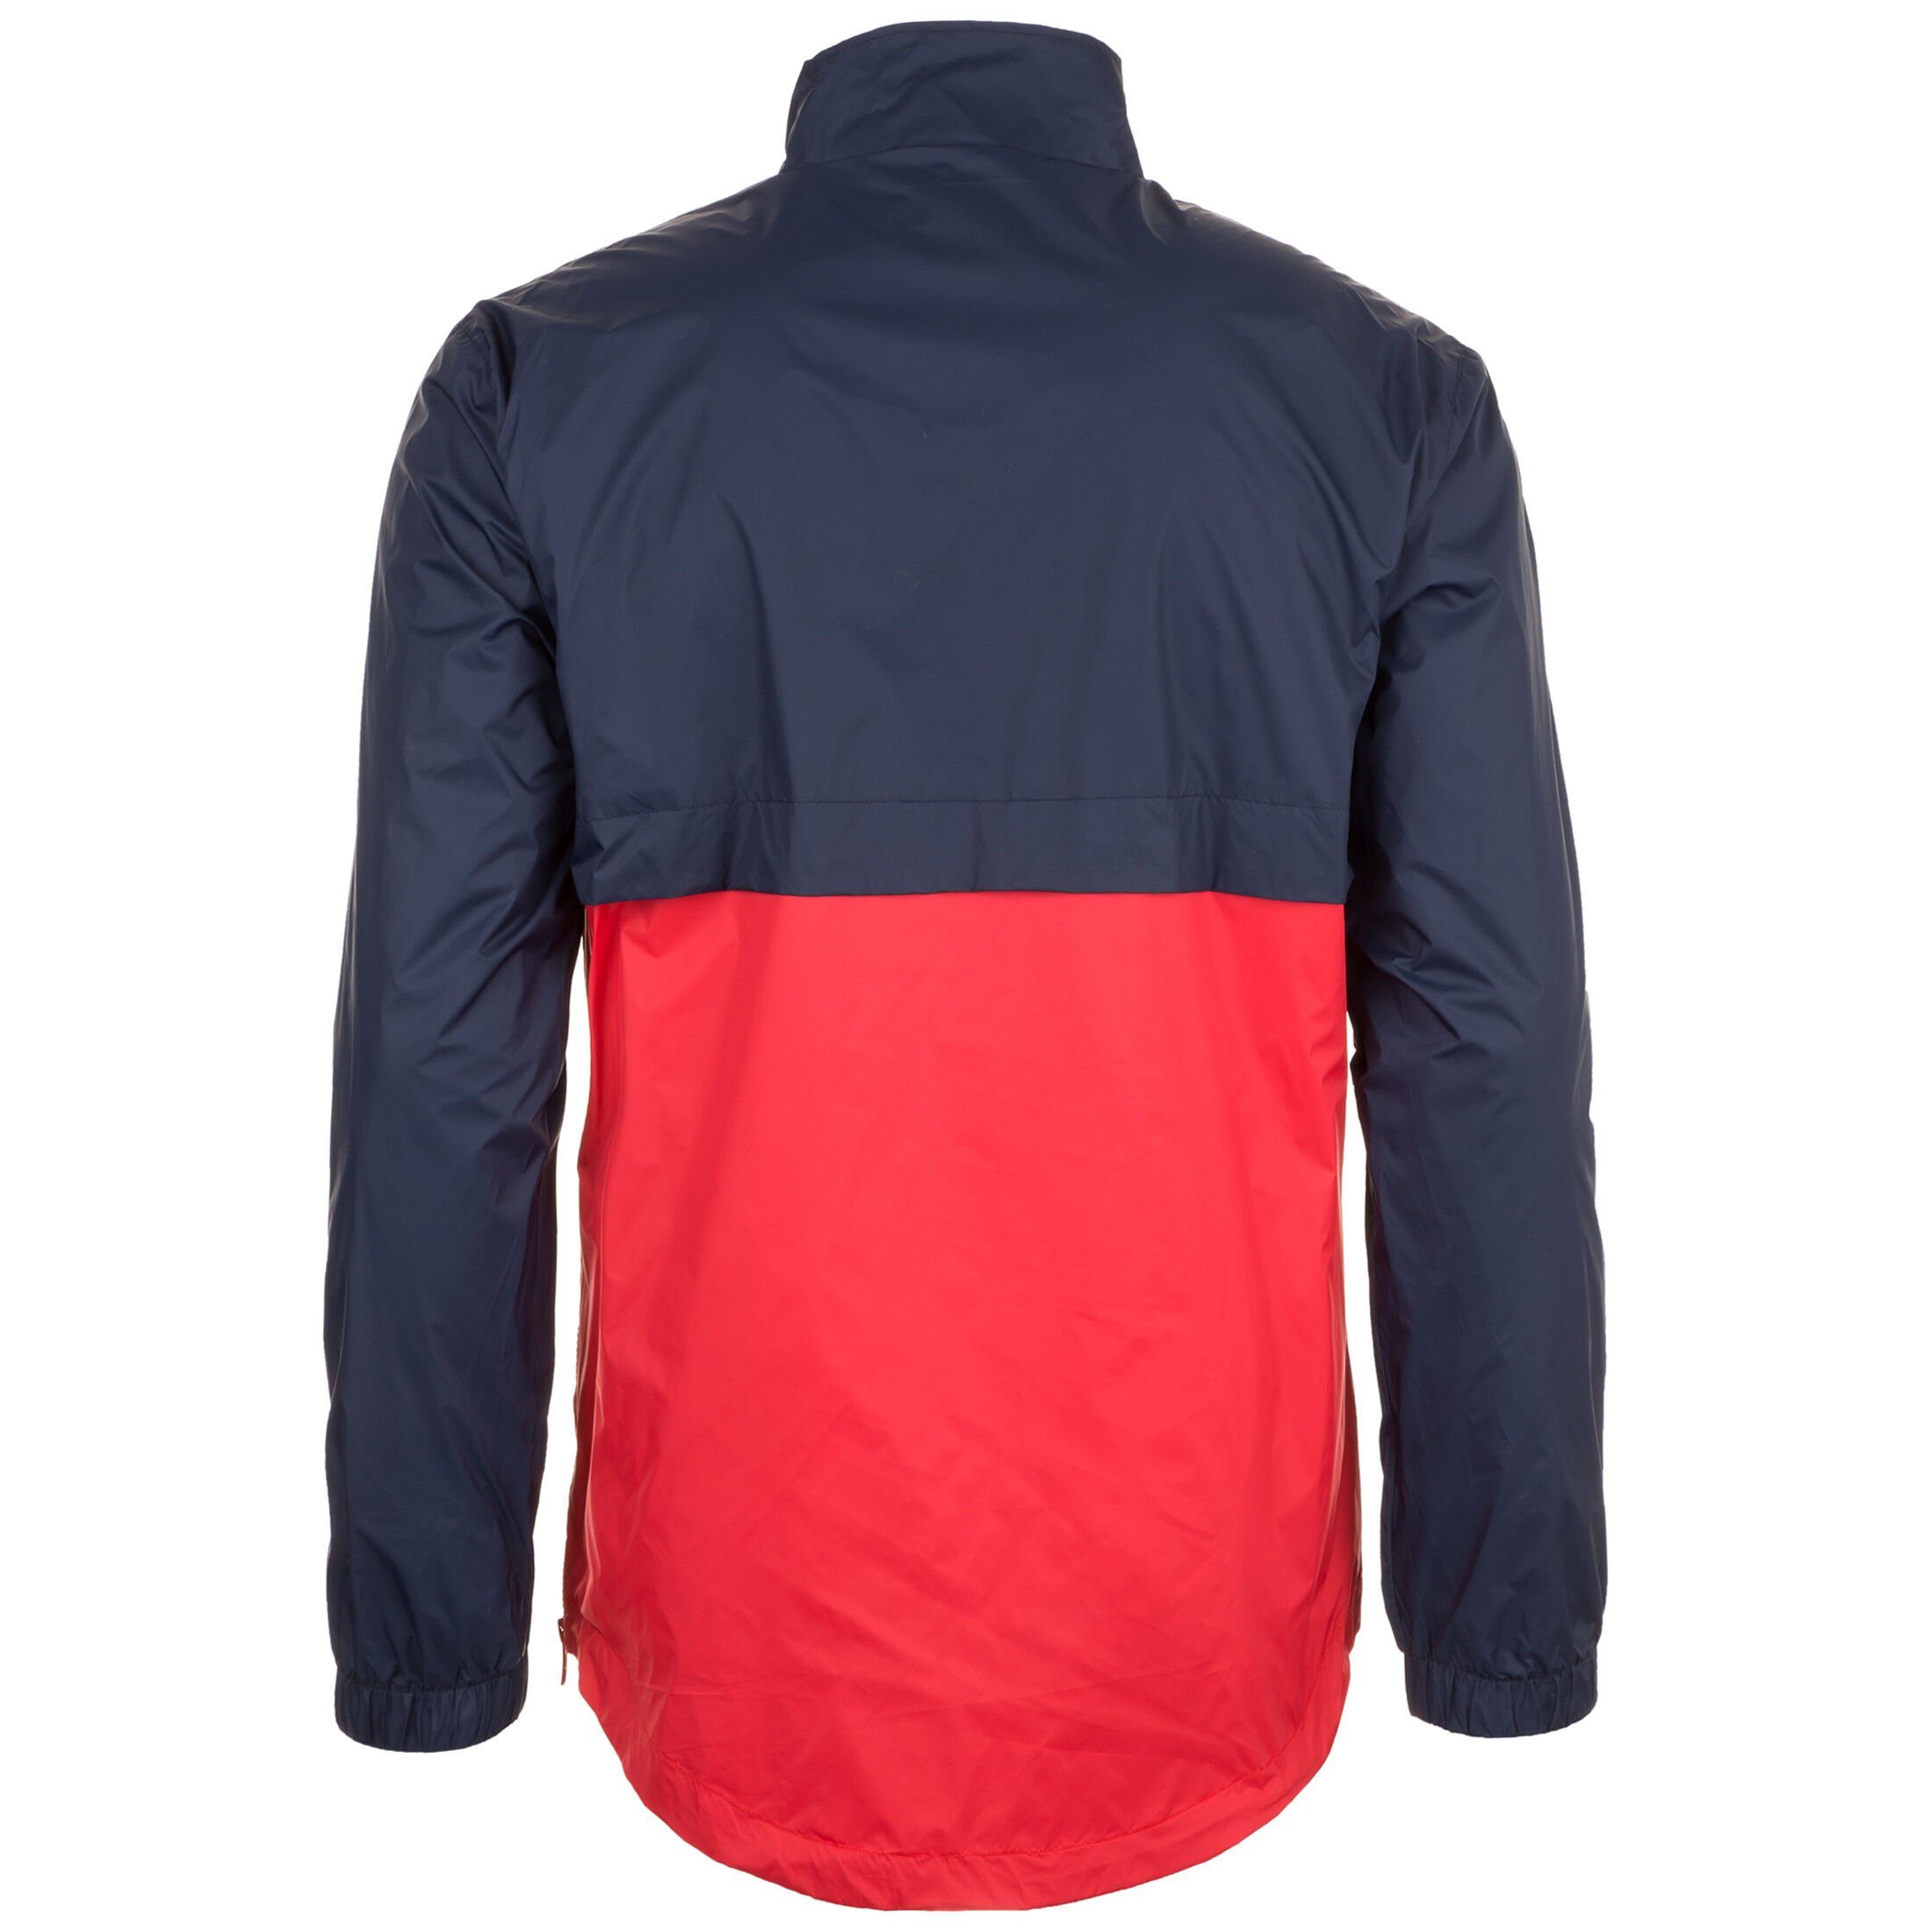 URBAN rot Stand Pull Jacke CLASSICS Over Collar Herren / Up dunkelblau Outdoorjacke